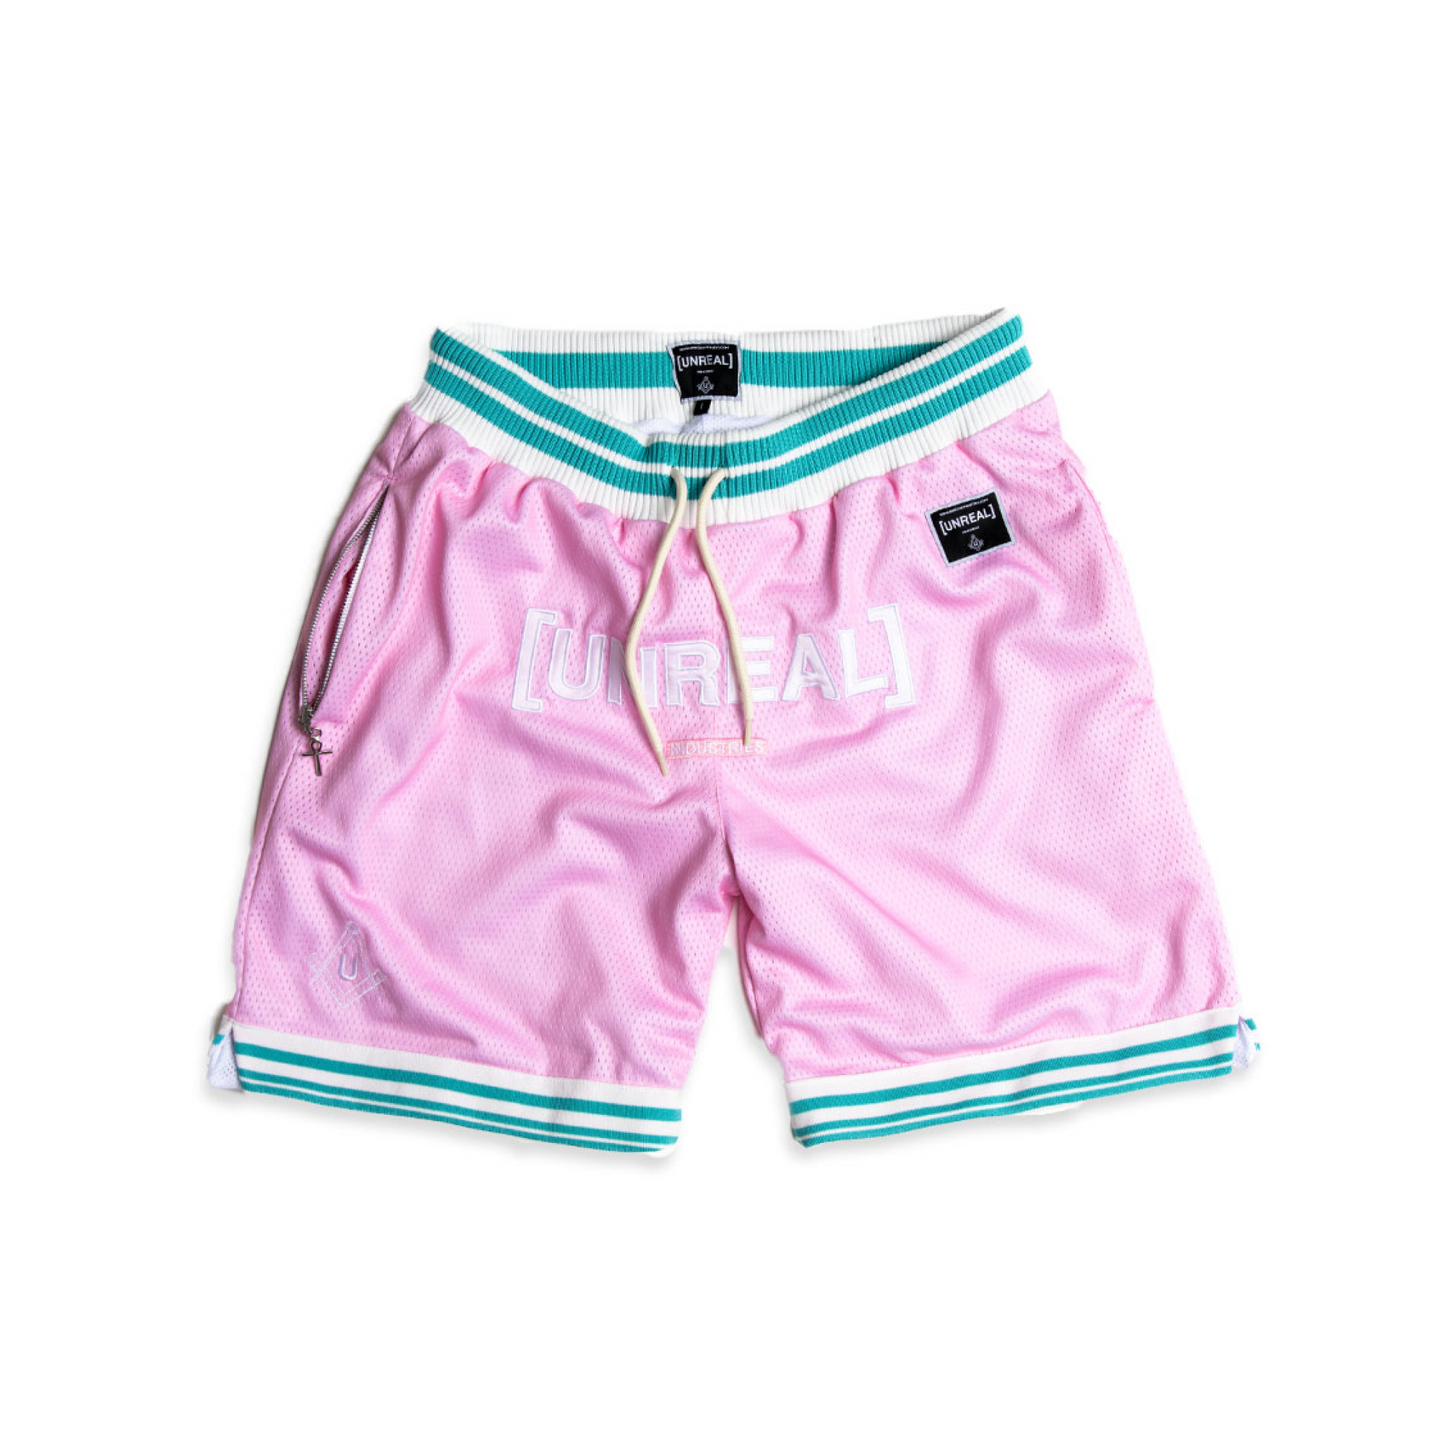 Unreal Team Shorts Miami Pink